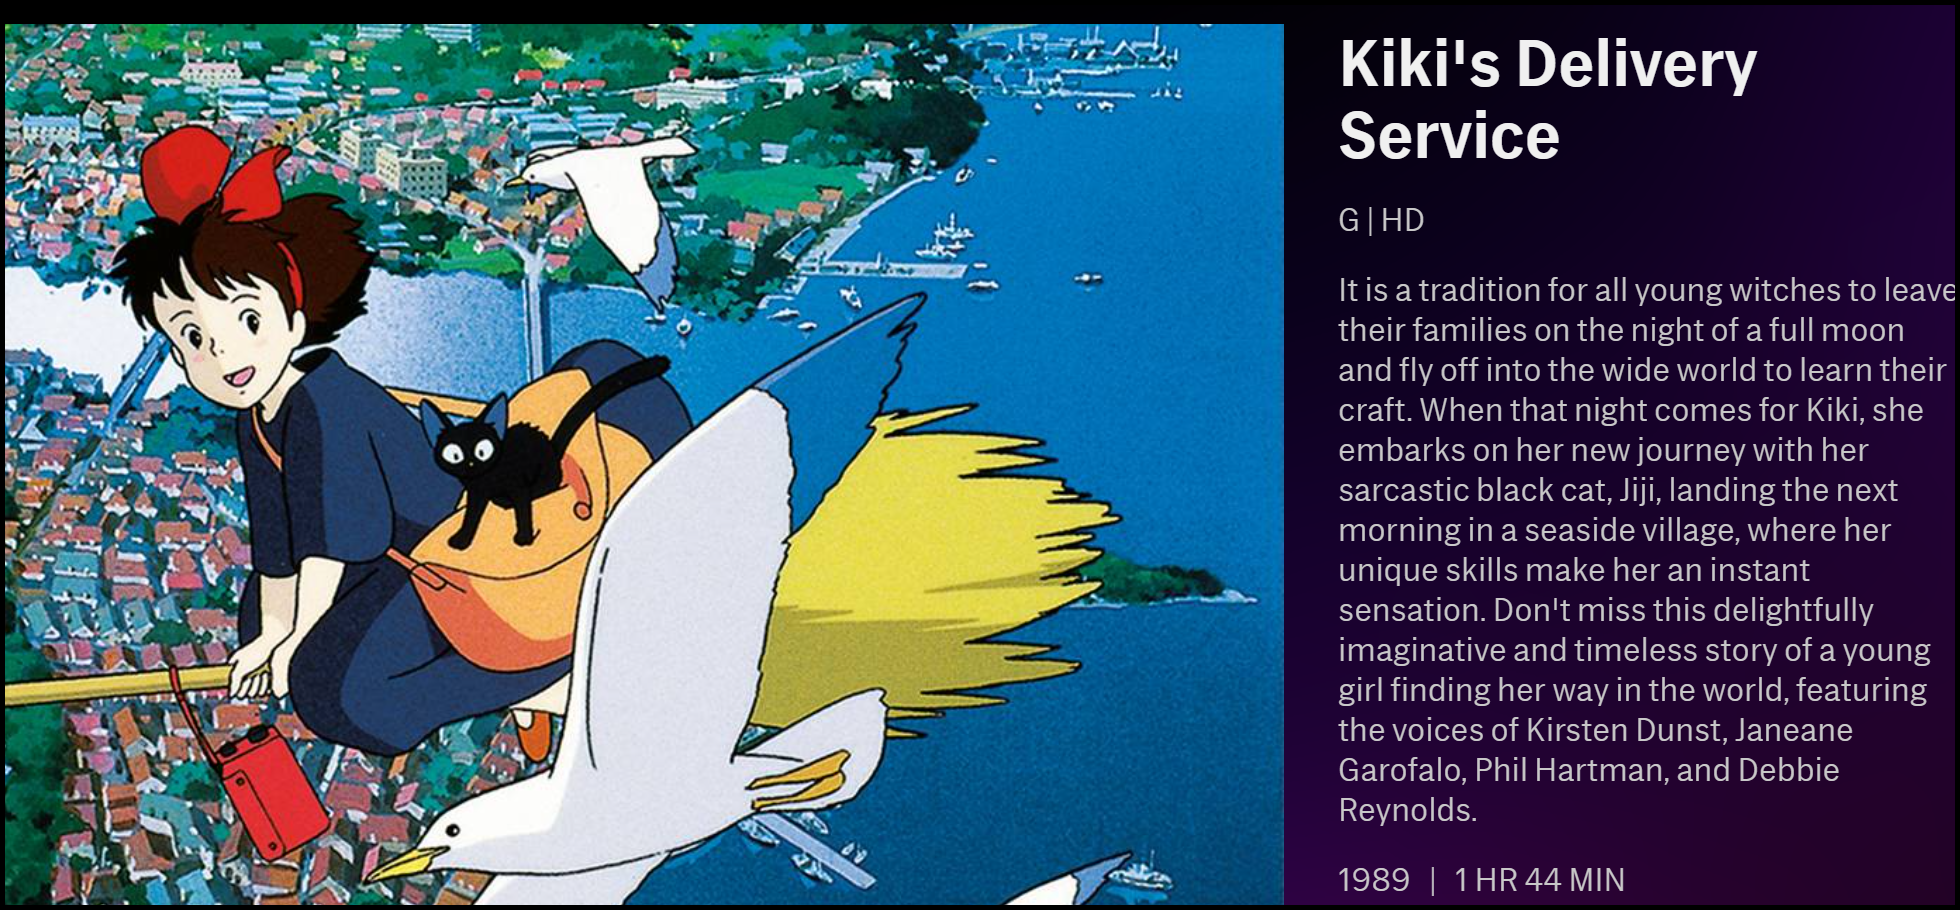 The description of Kiki's Delivery Service on HBO Max.